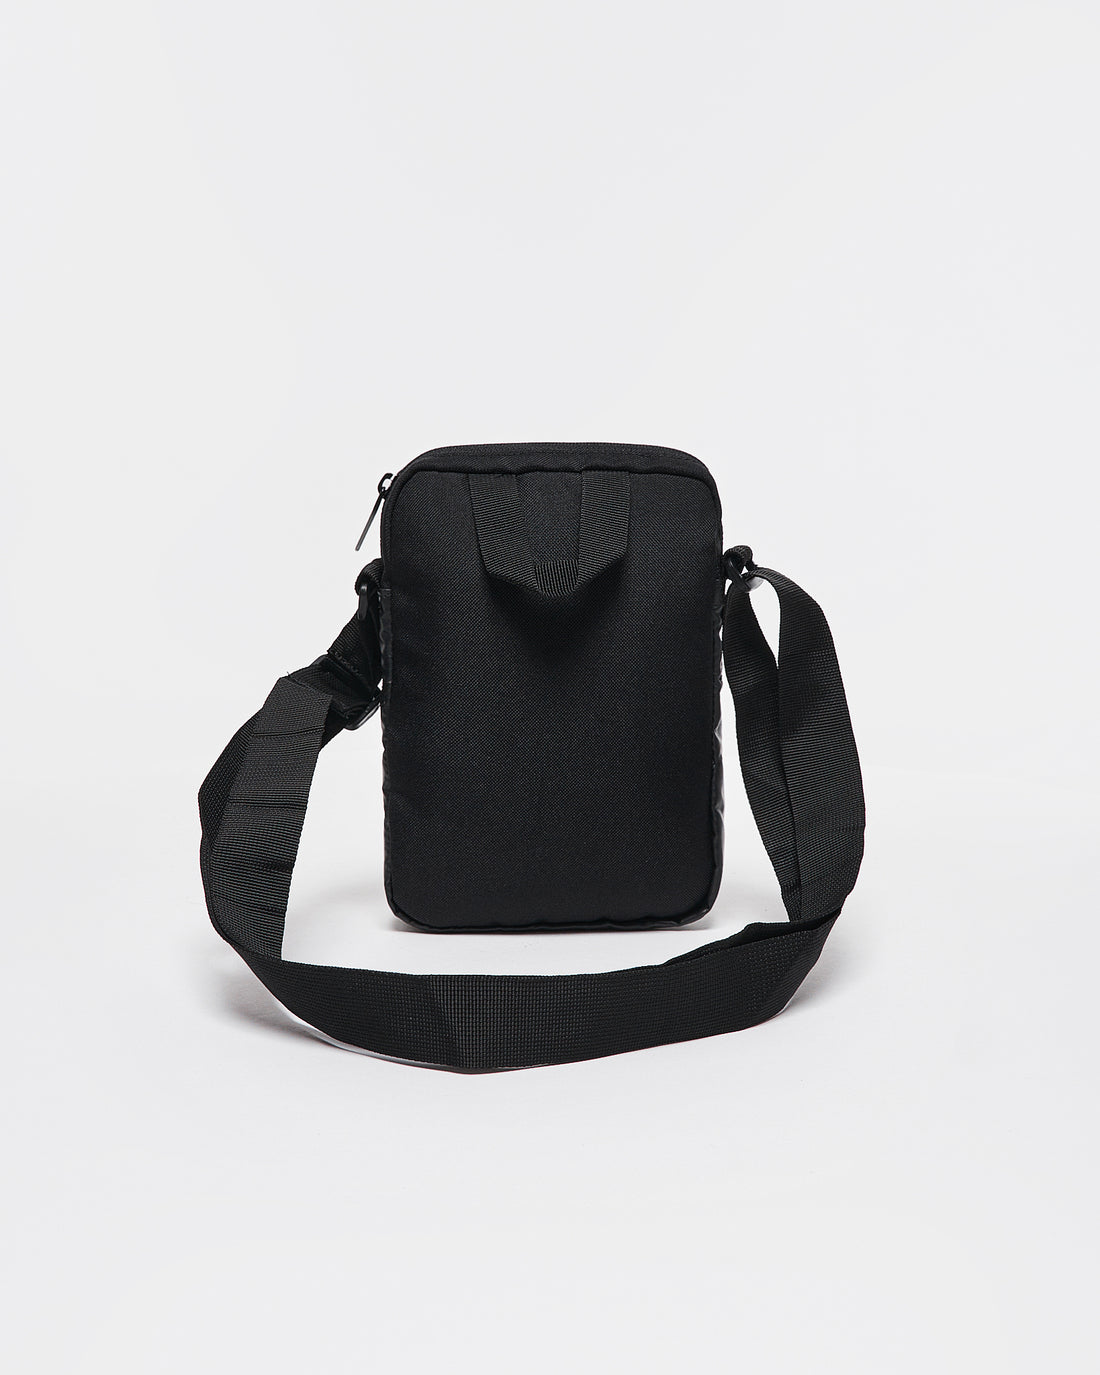 ADI Striped Black Sling Bag 13.90